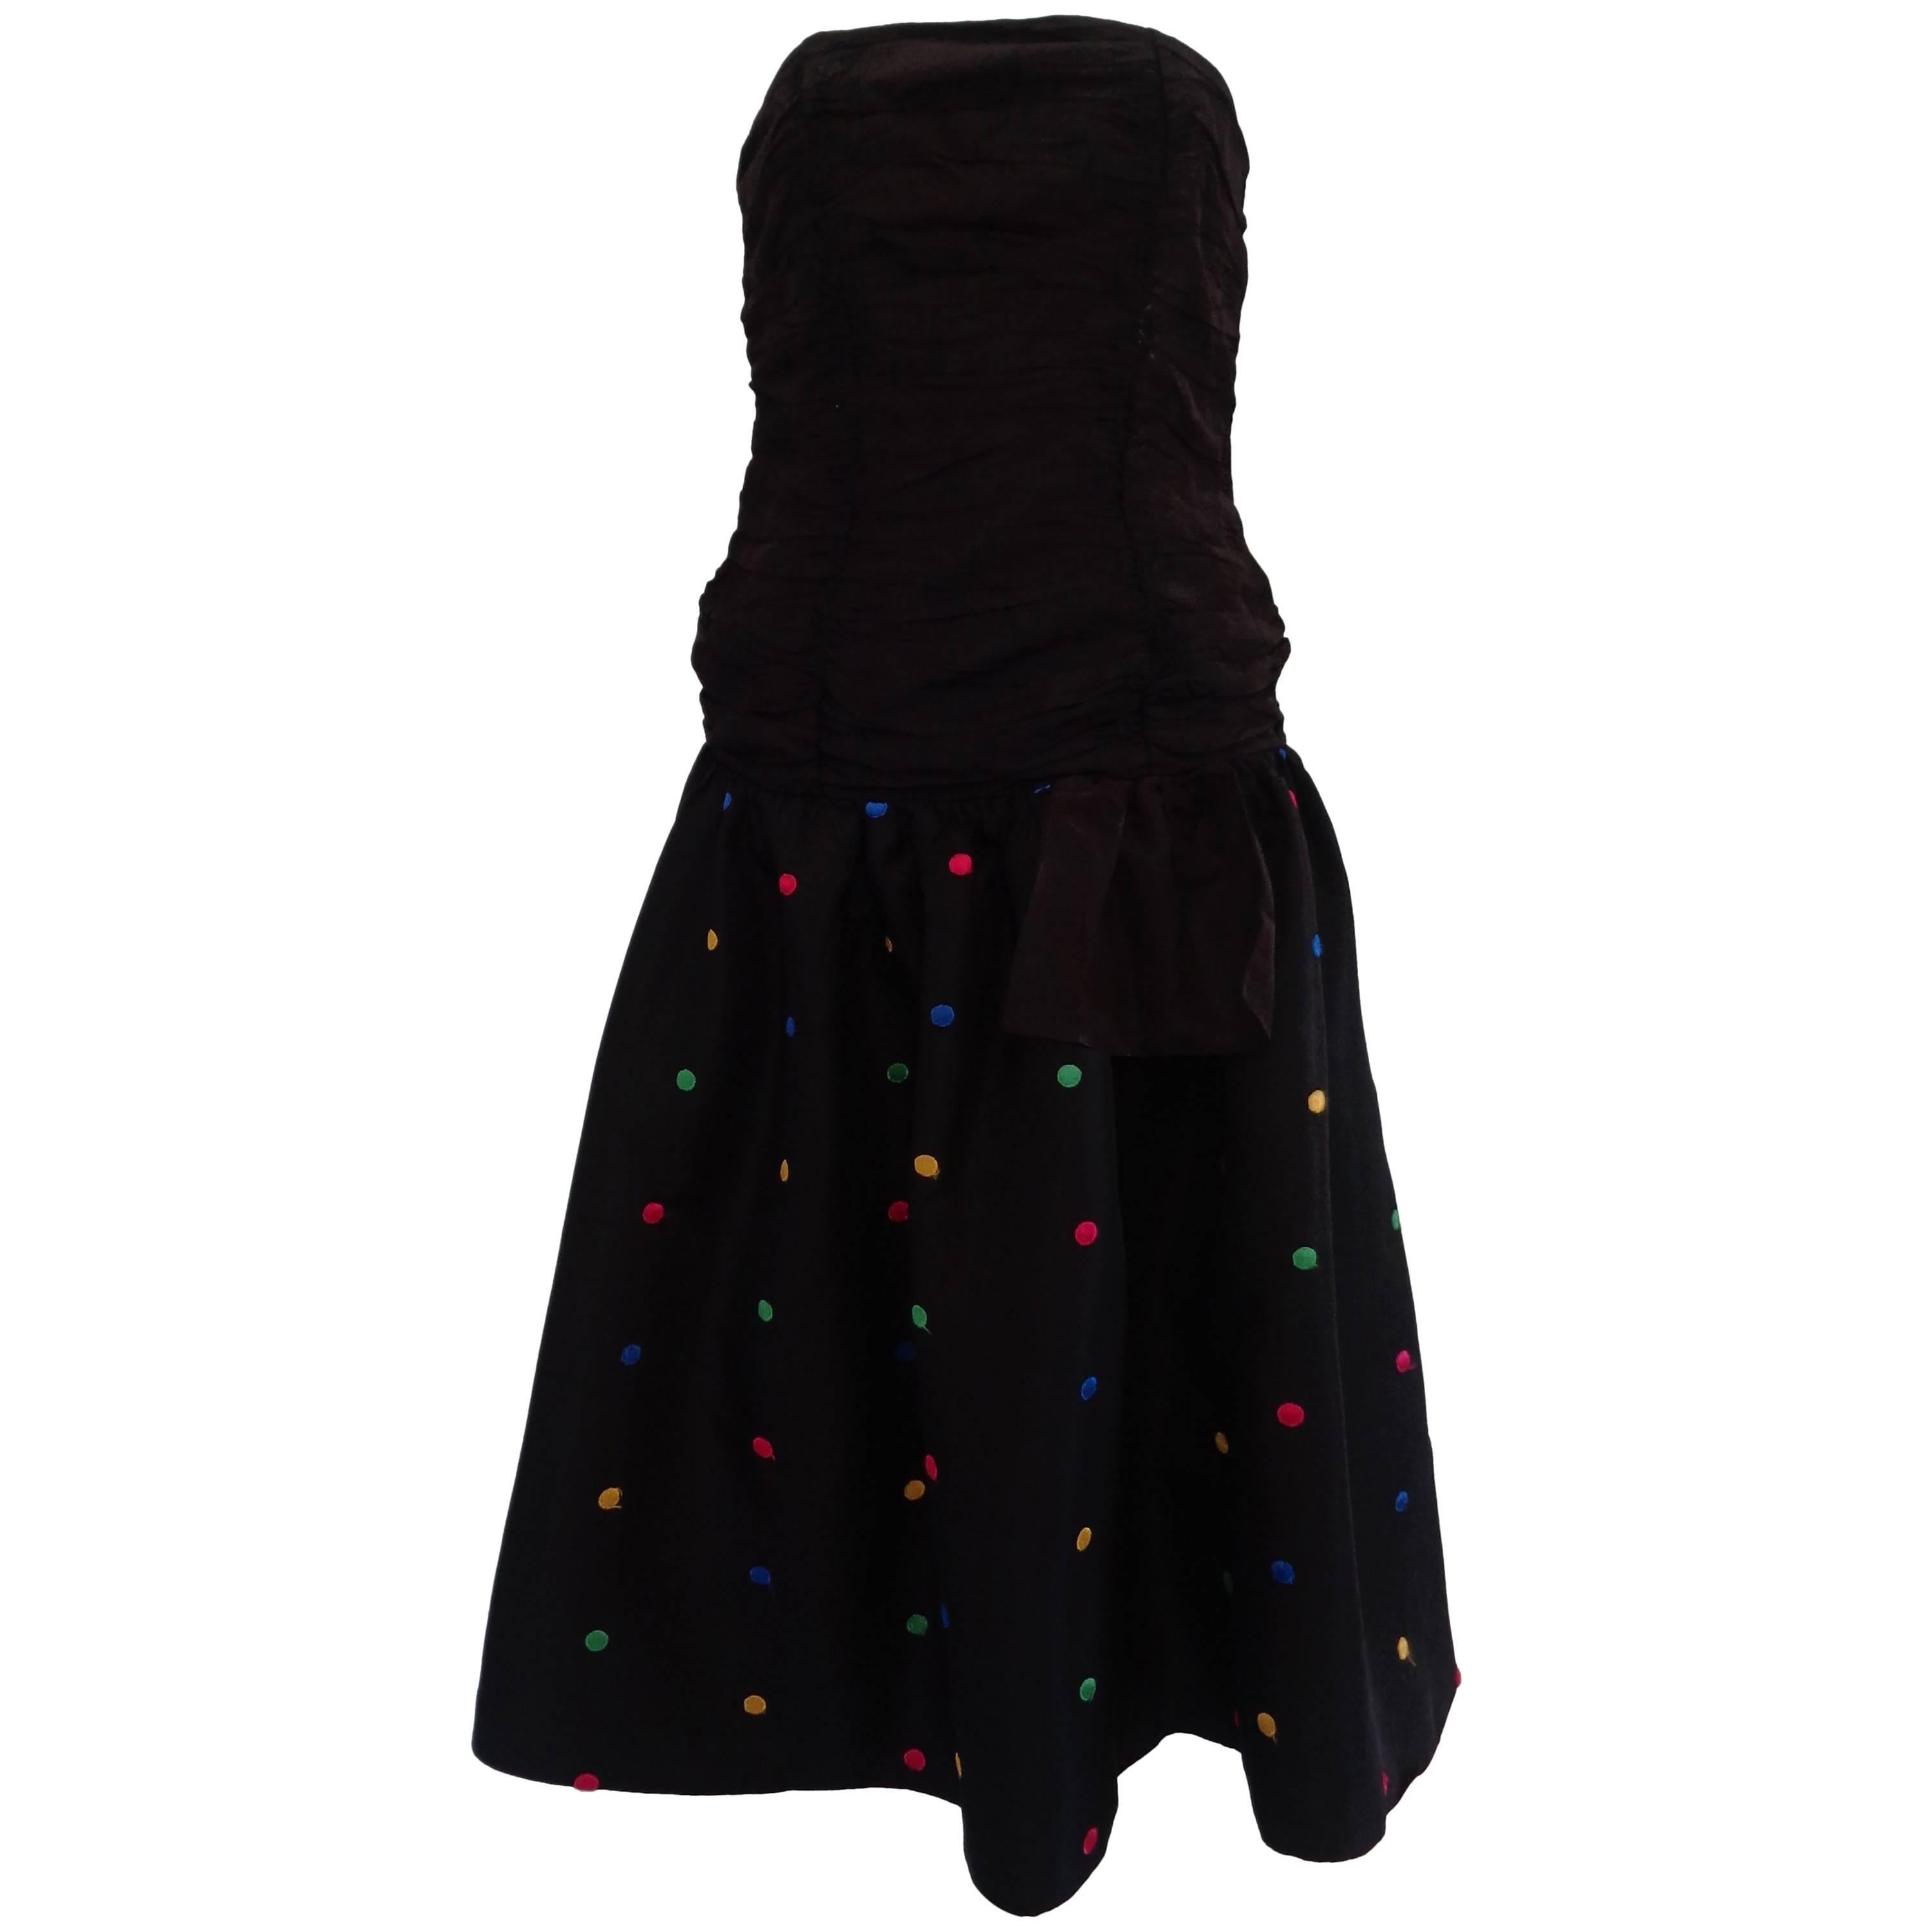 1980s Prom Night Blacke Dress Embellished Pois on Skirt